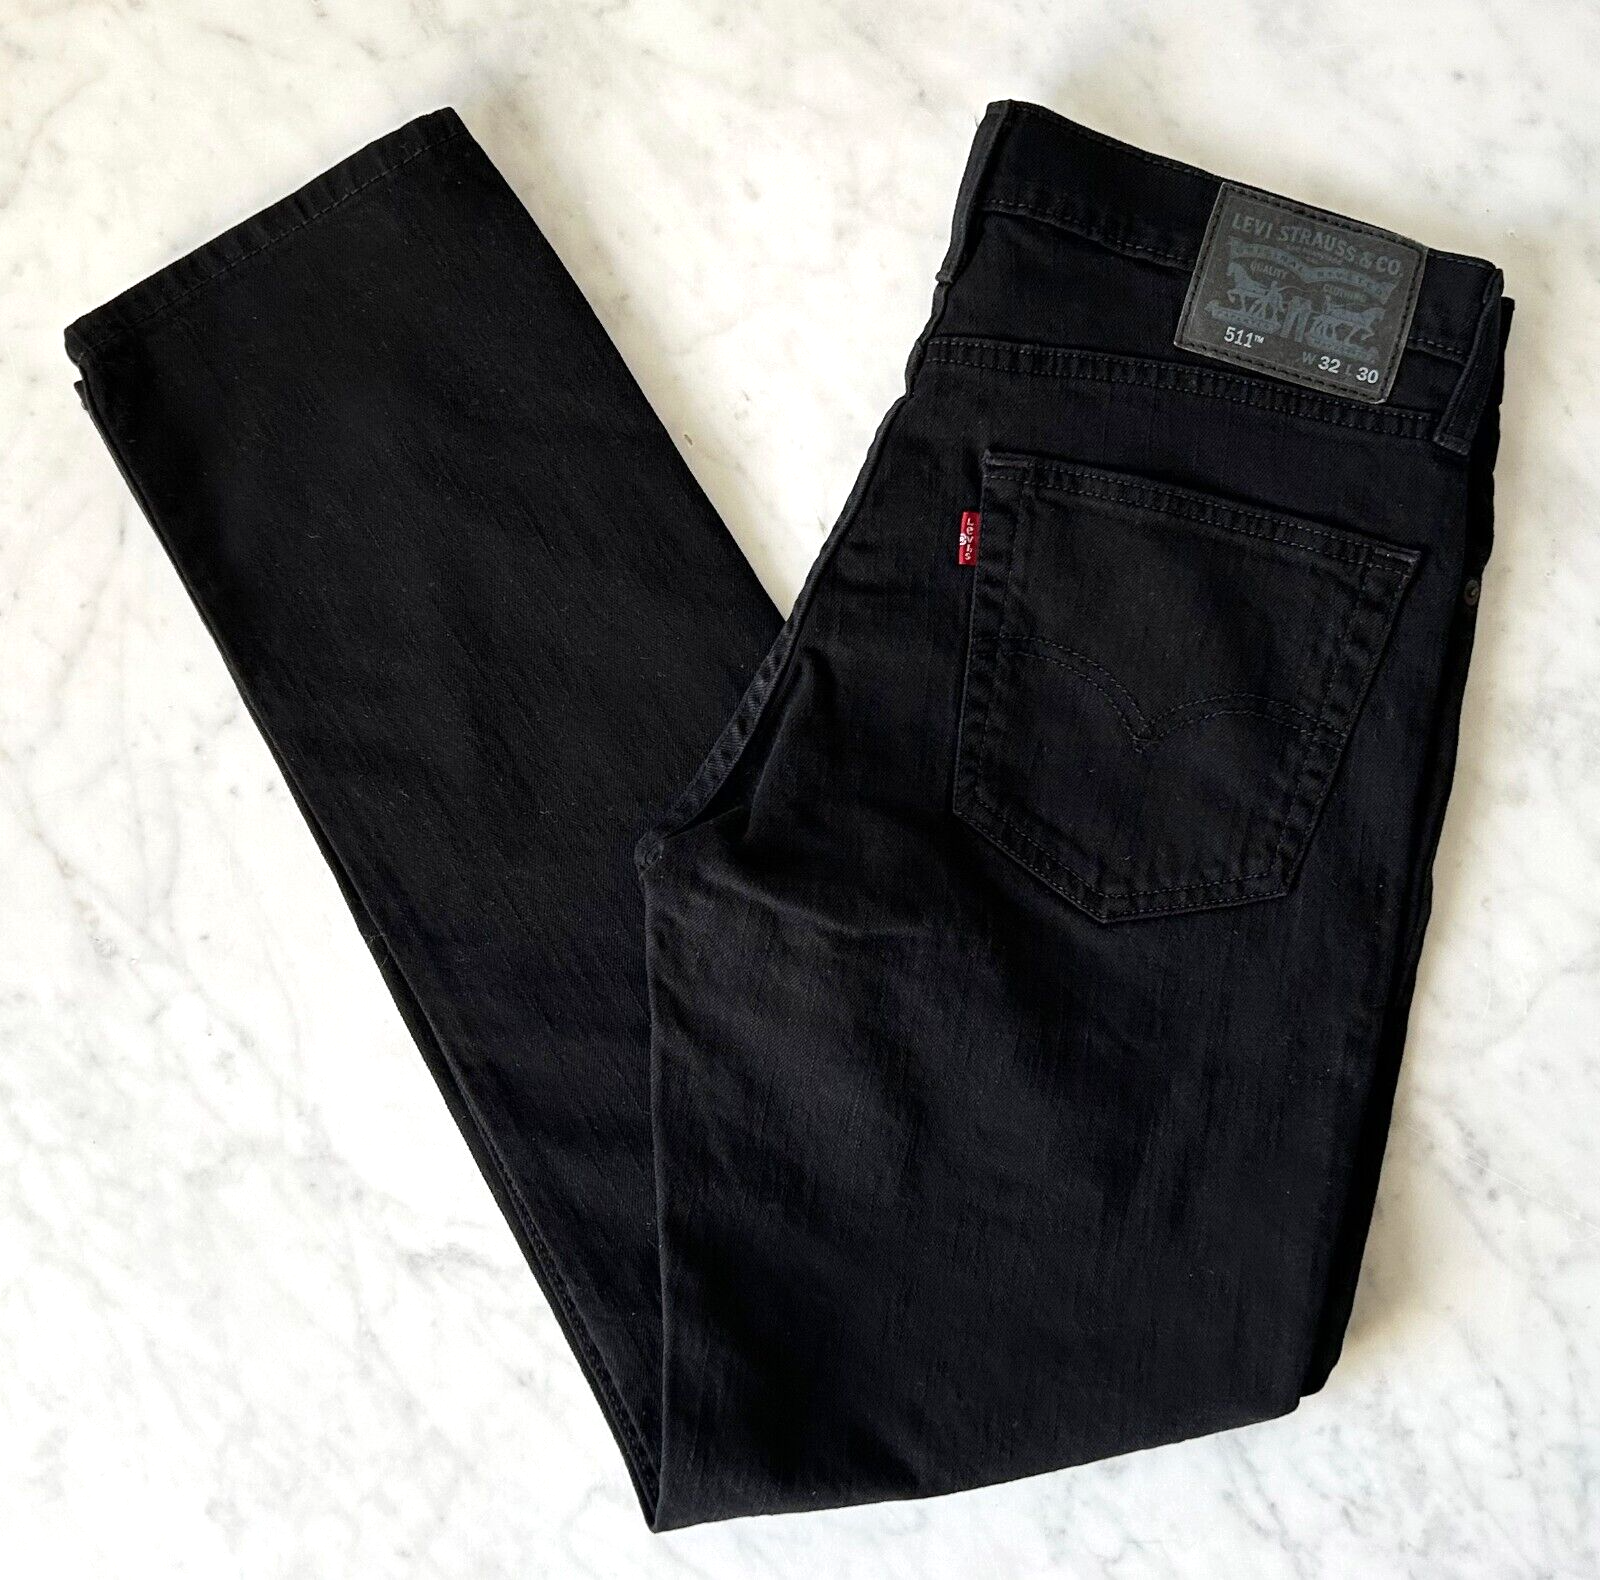 Primary image for Levi's 511 Slim Fit Black Denim Jeans Zip Fly #04511-4406 Mens W32 x L30